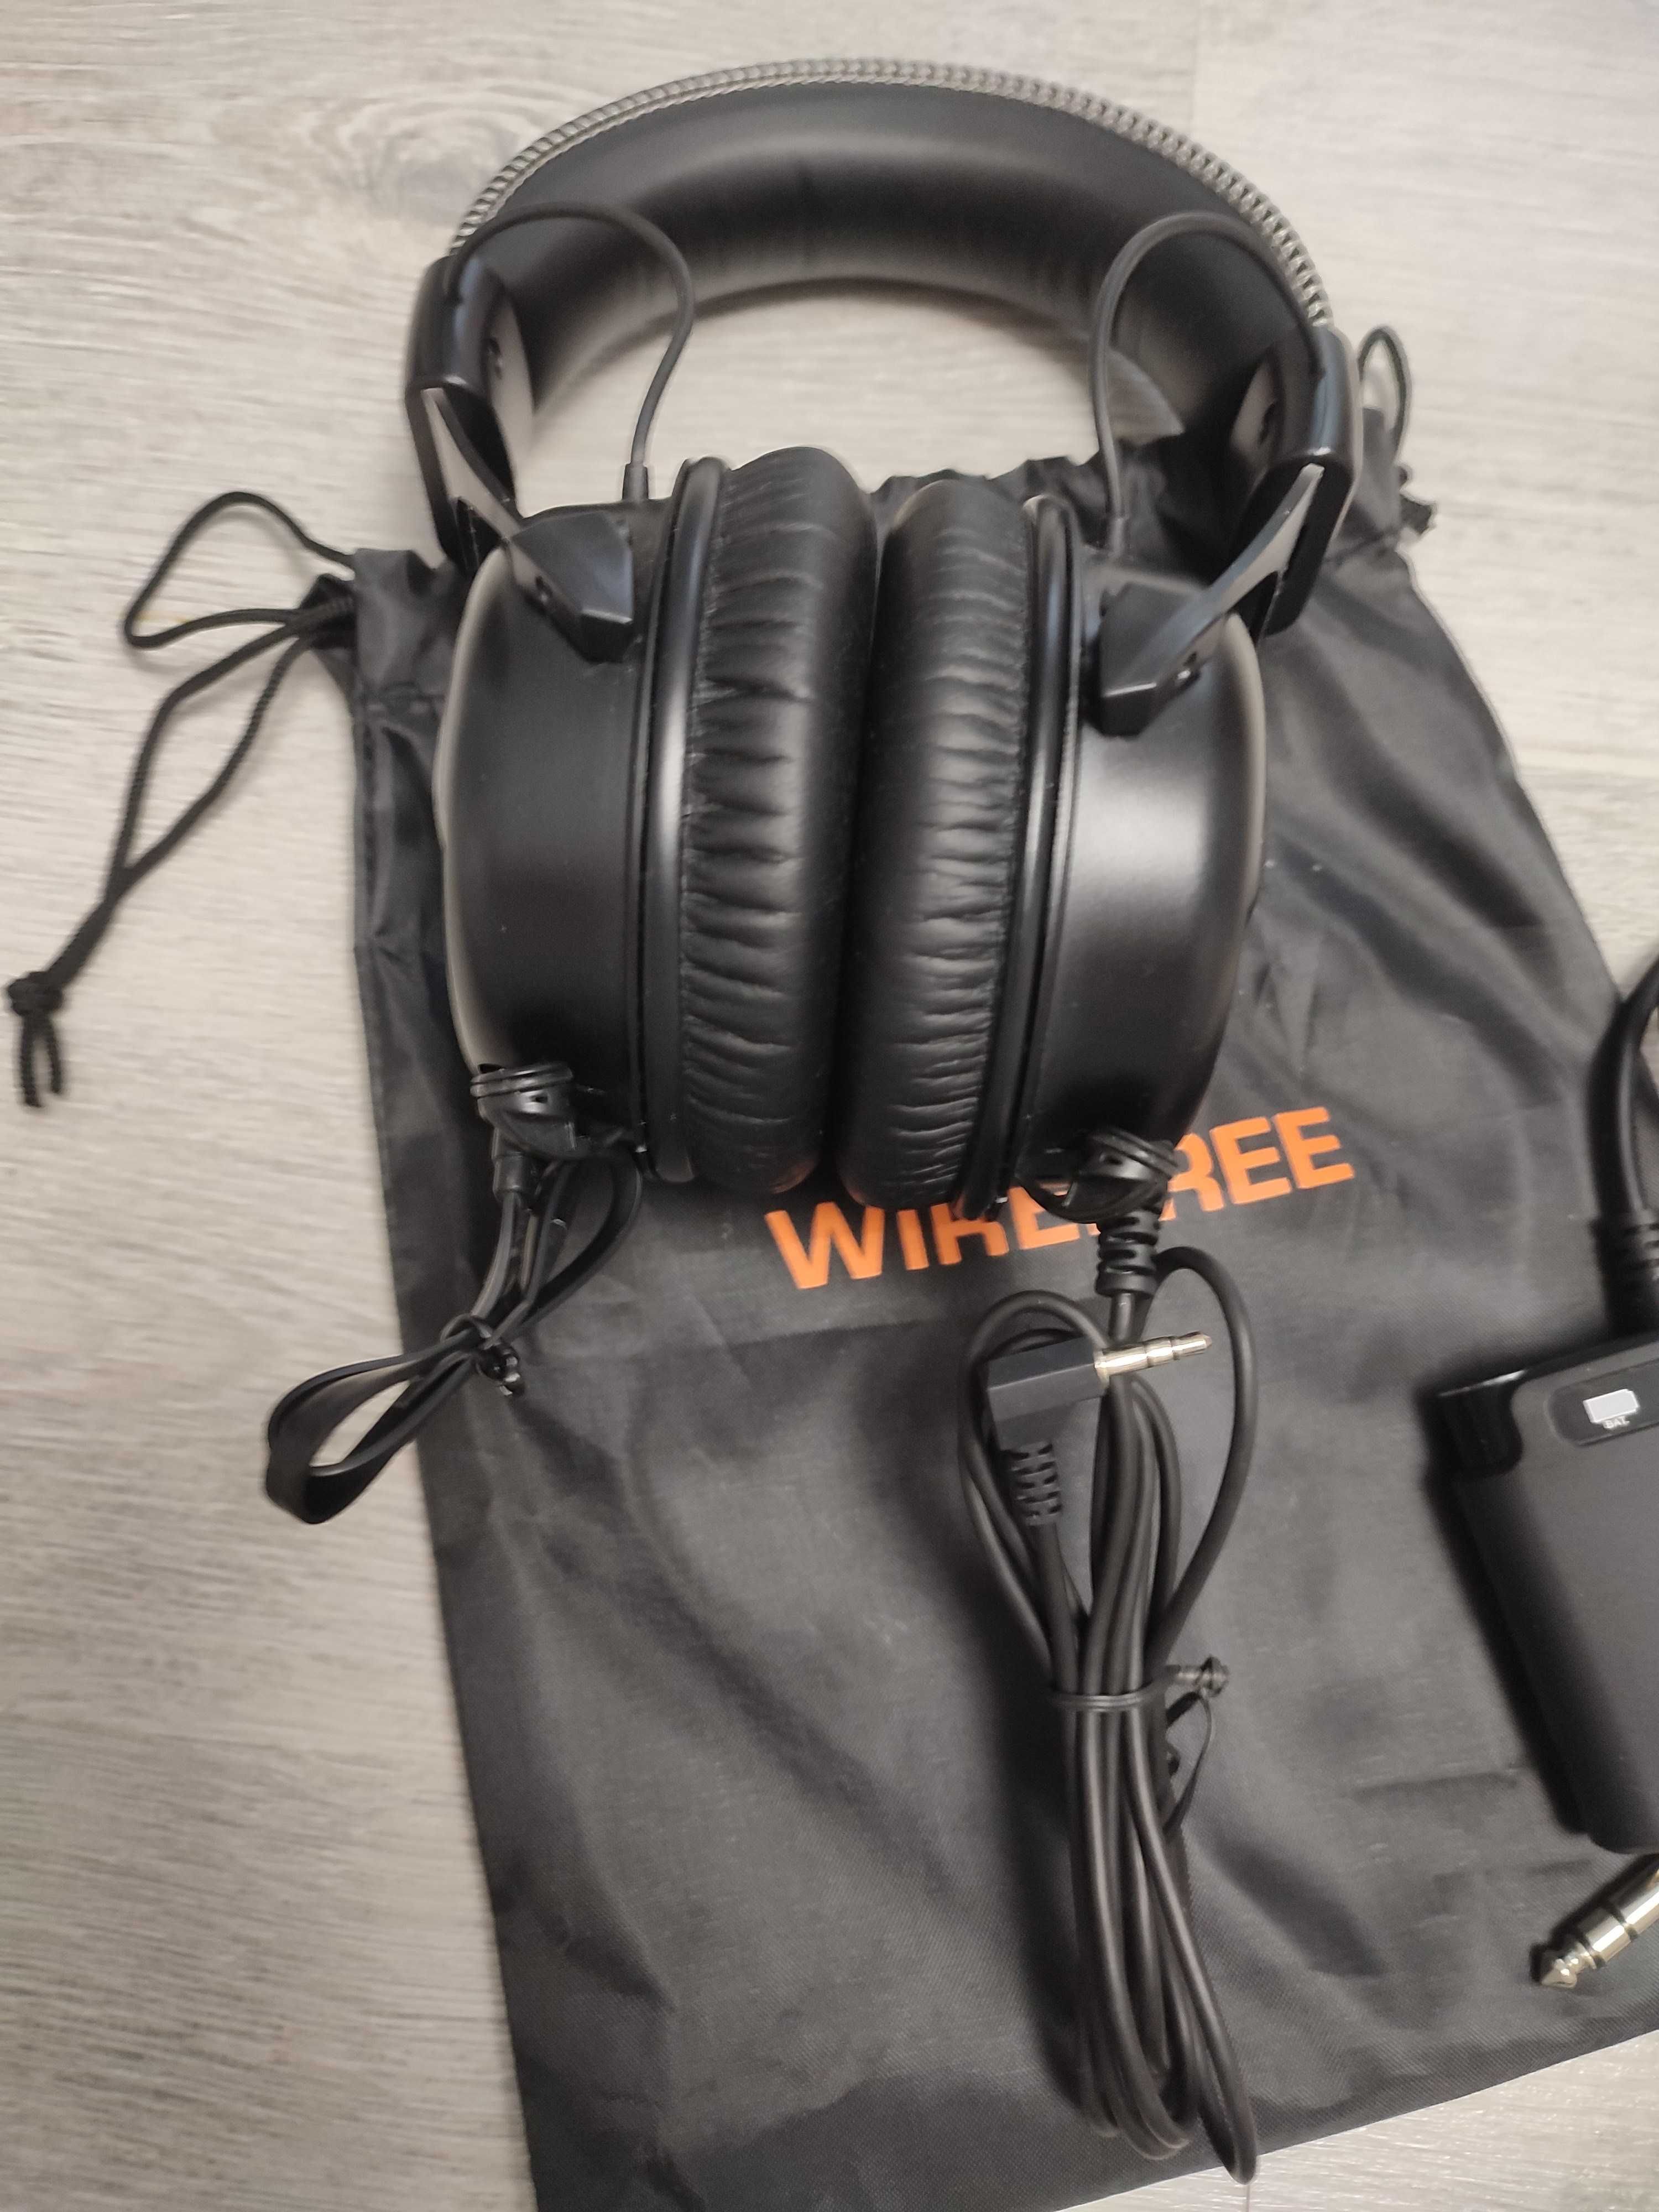 Безпроводні навушники Quest wire free pro headphones